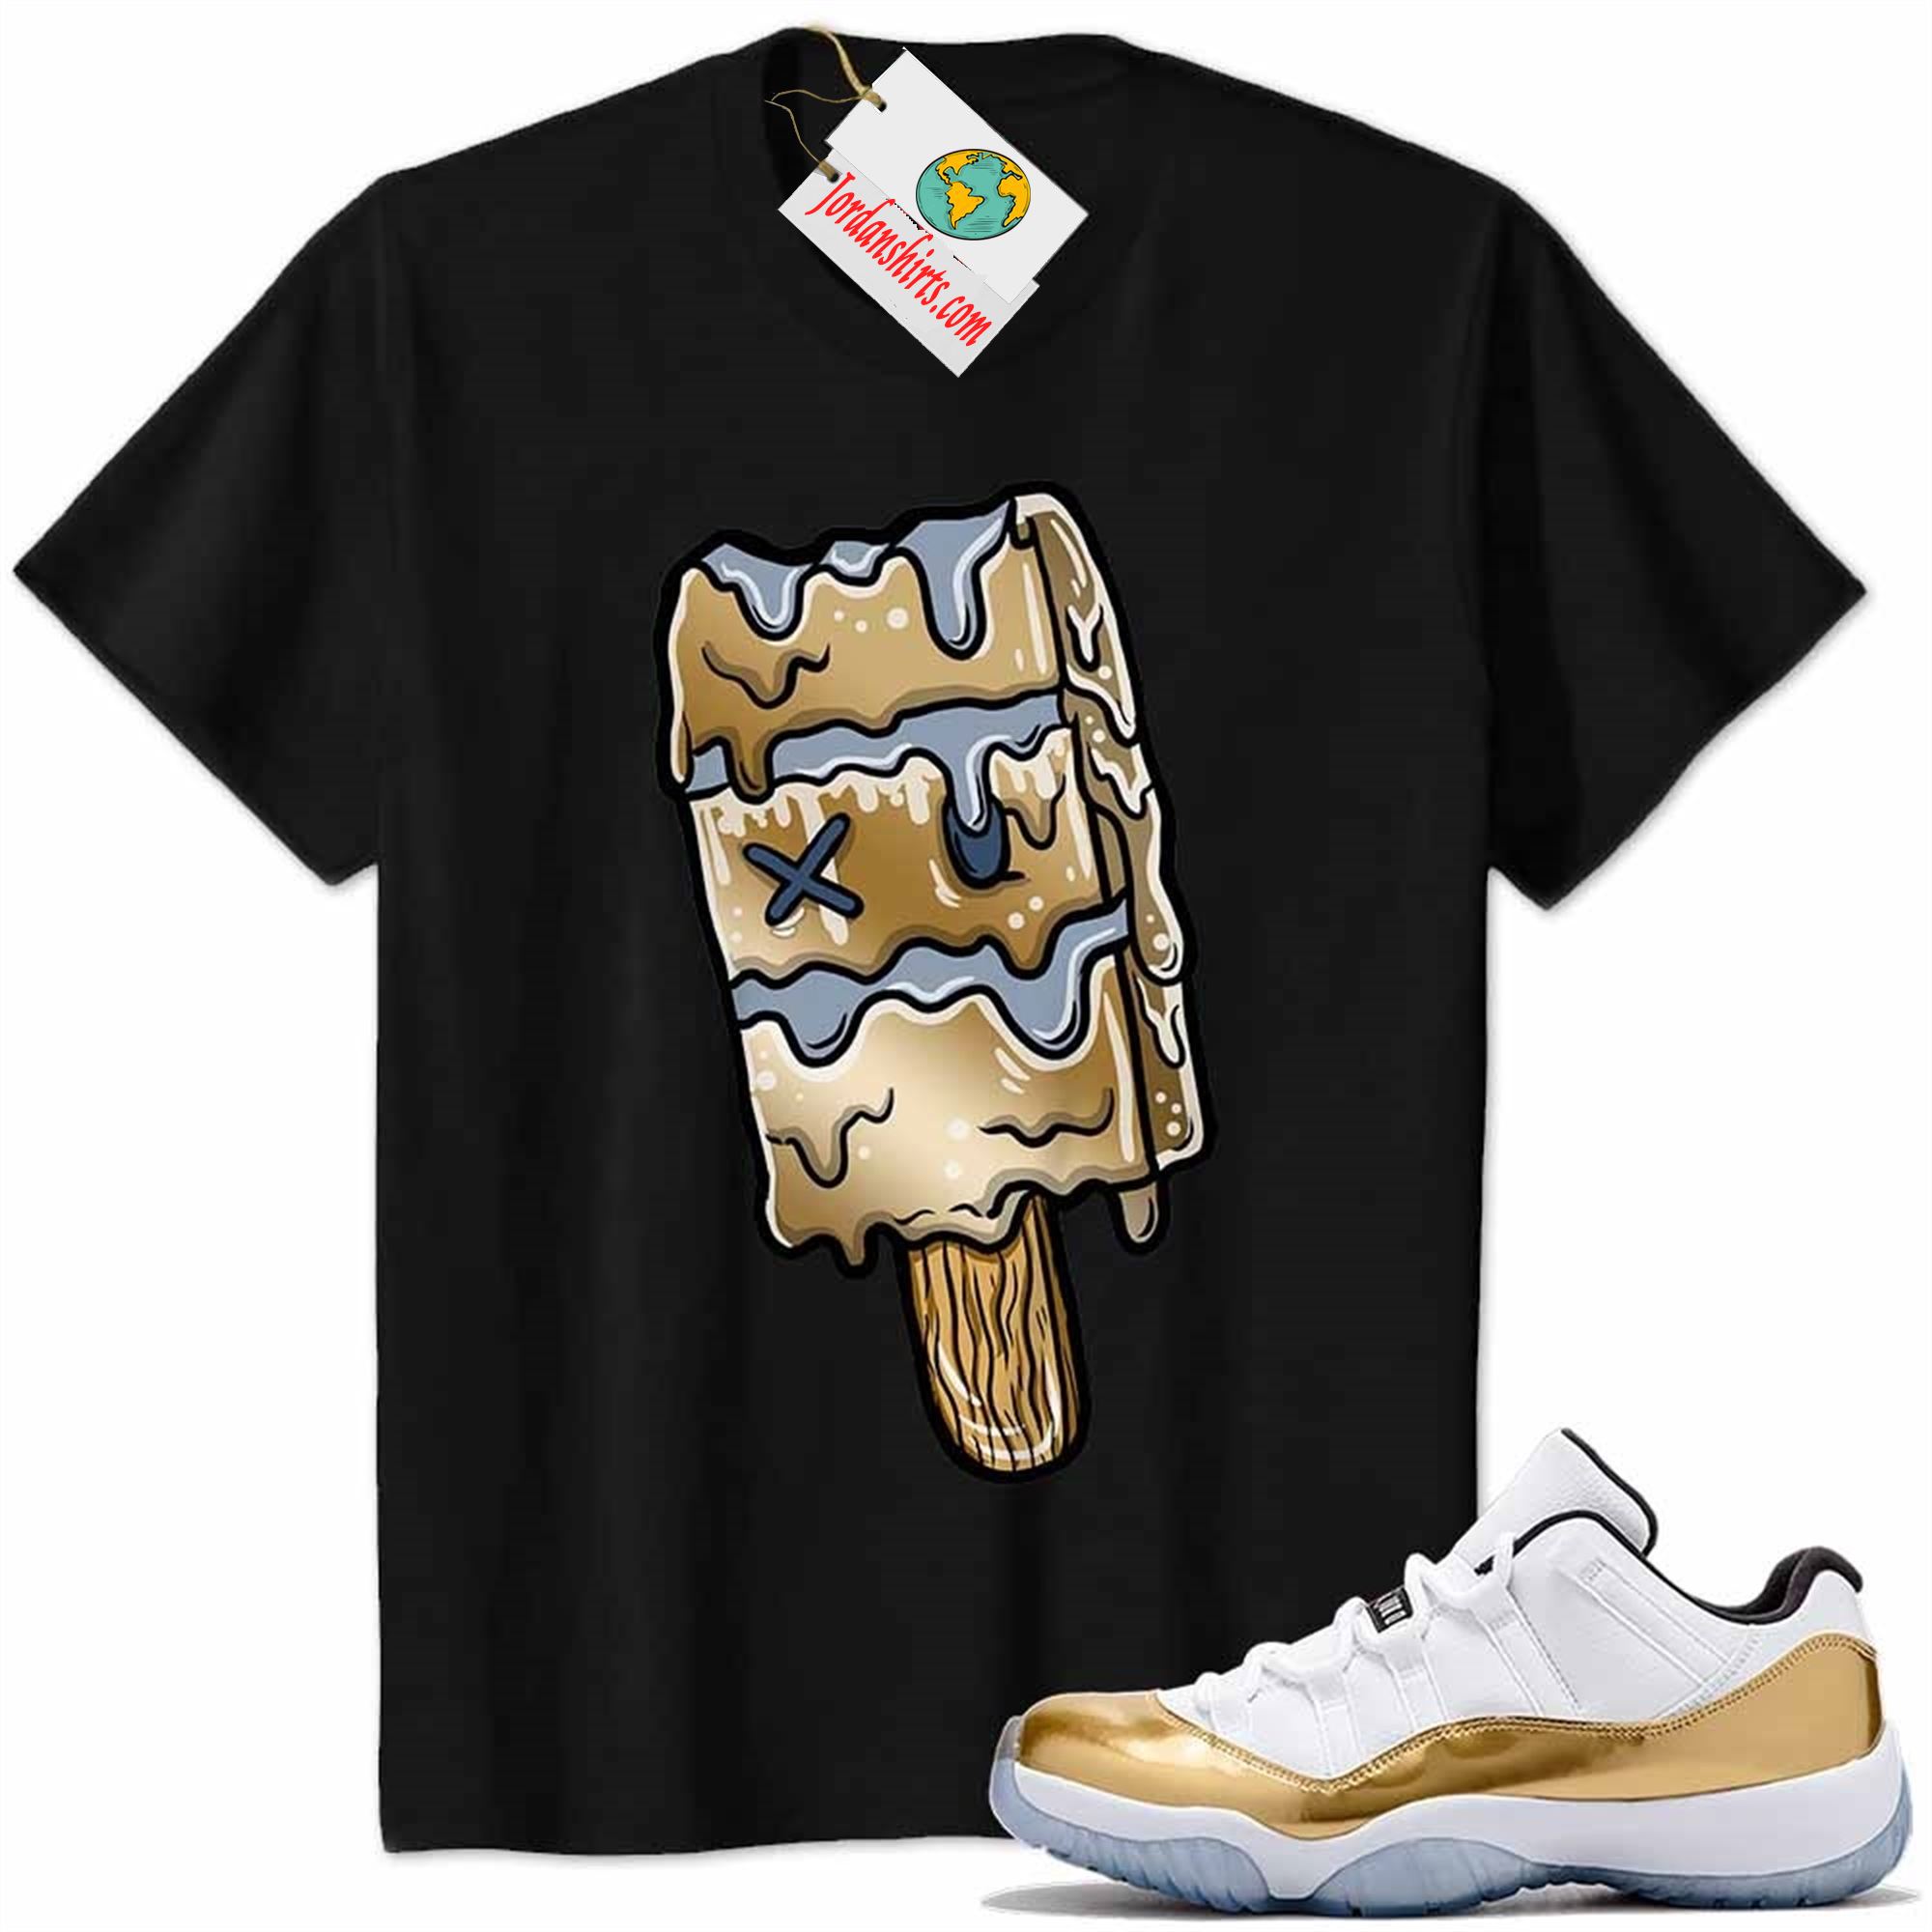 Jordan 11 Shirt, Ice Cream Dripping Black Air Jordan 11 Metallic Gold 11s Full Size Up To 5xl